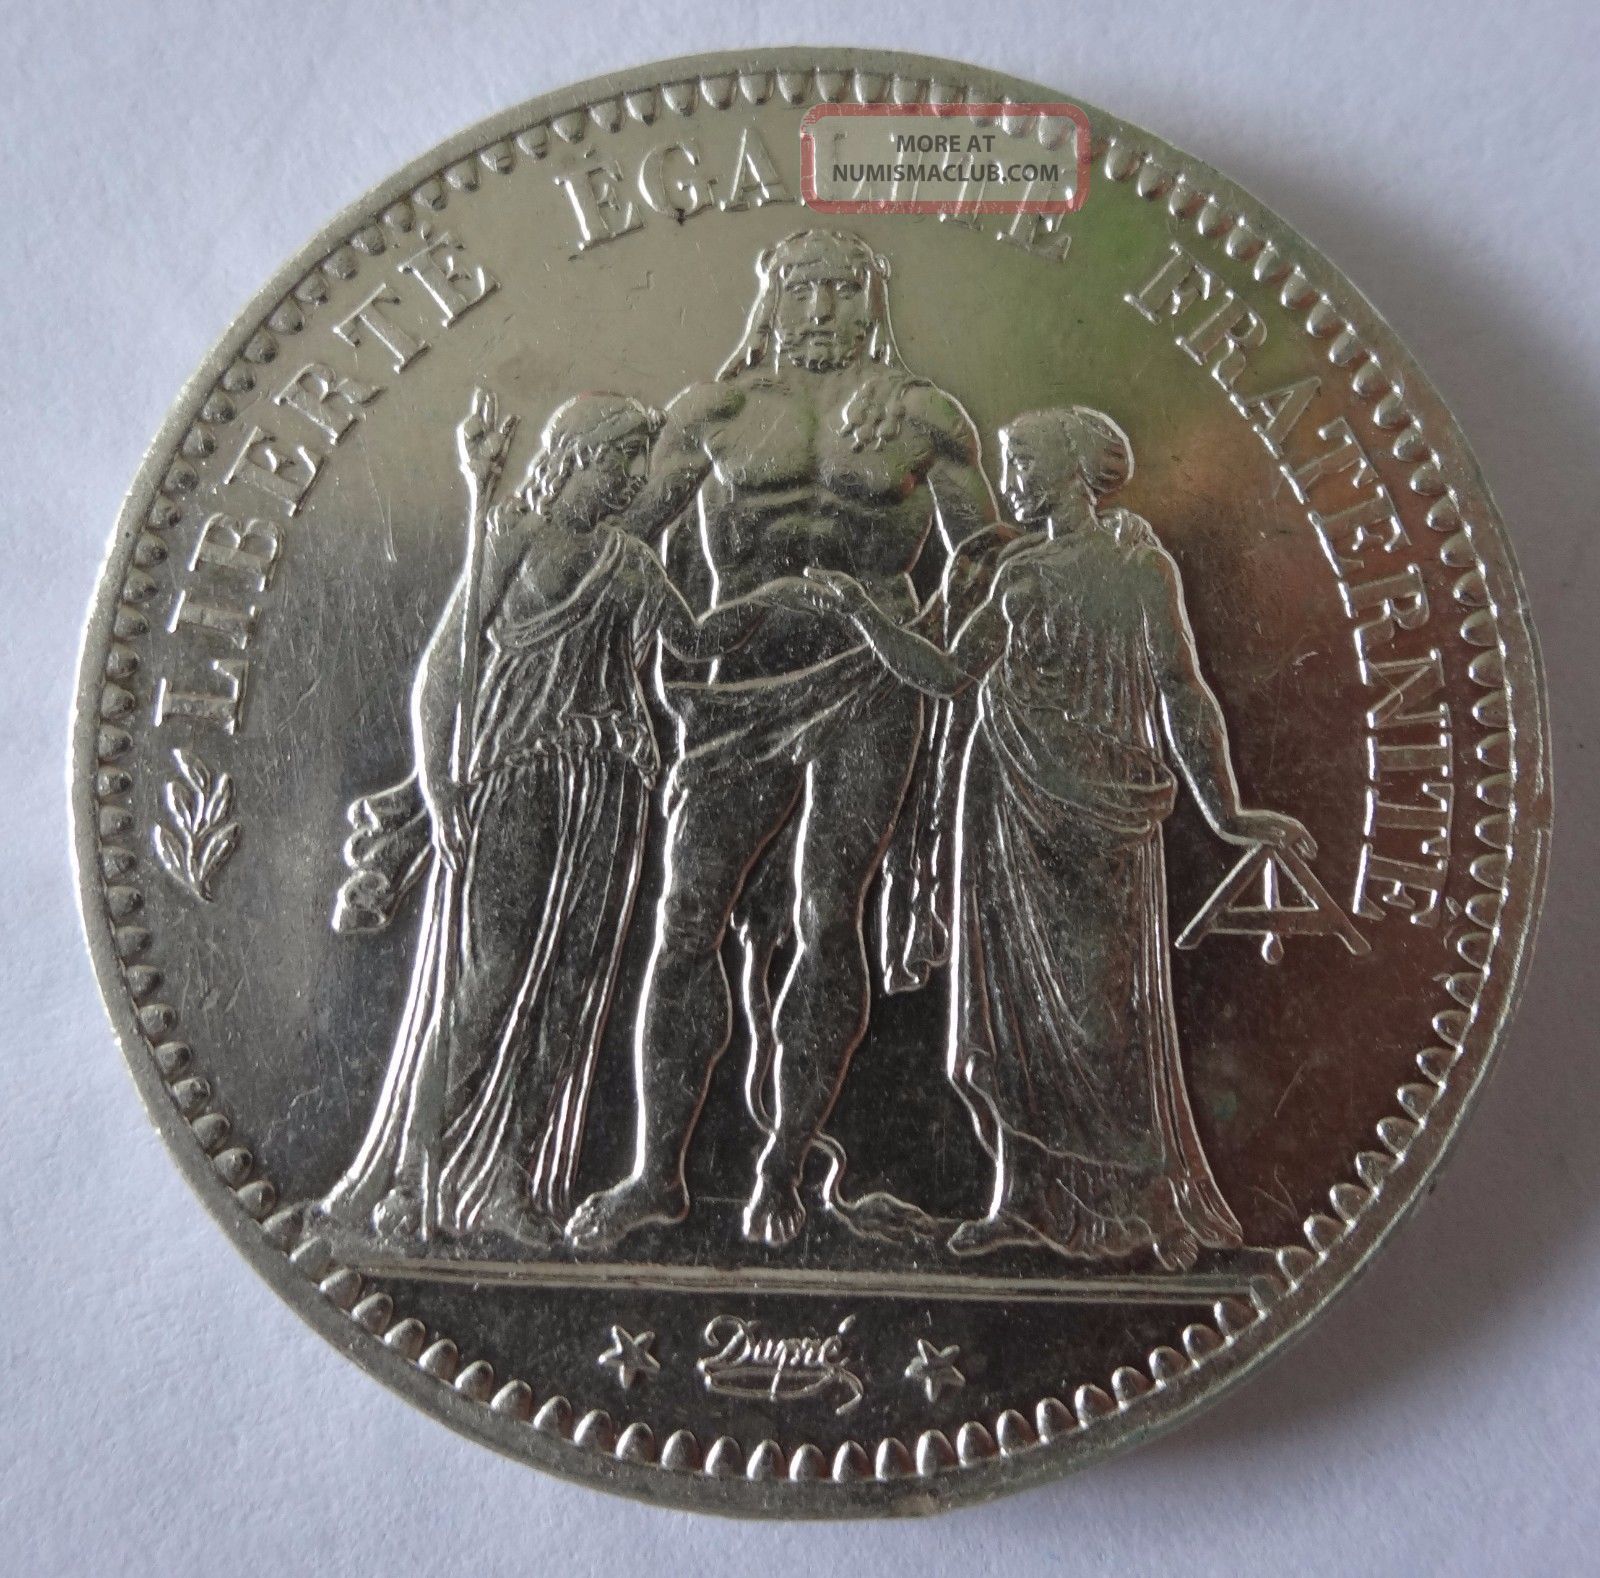 France 1876 A 5 Francs Liberte Egalite Fraternite Silver Coin France photo